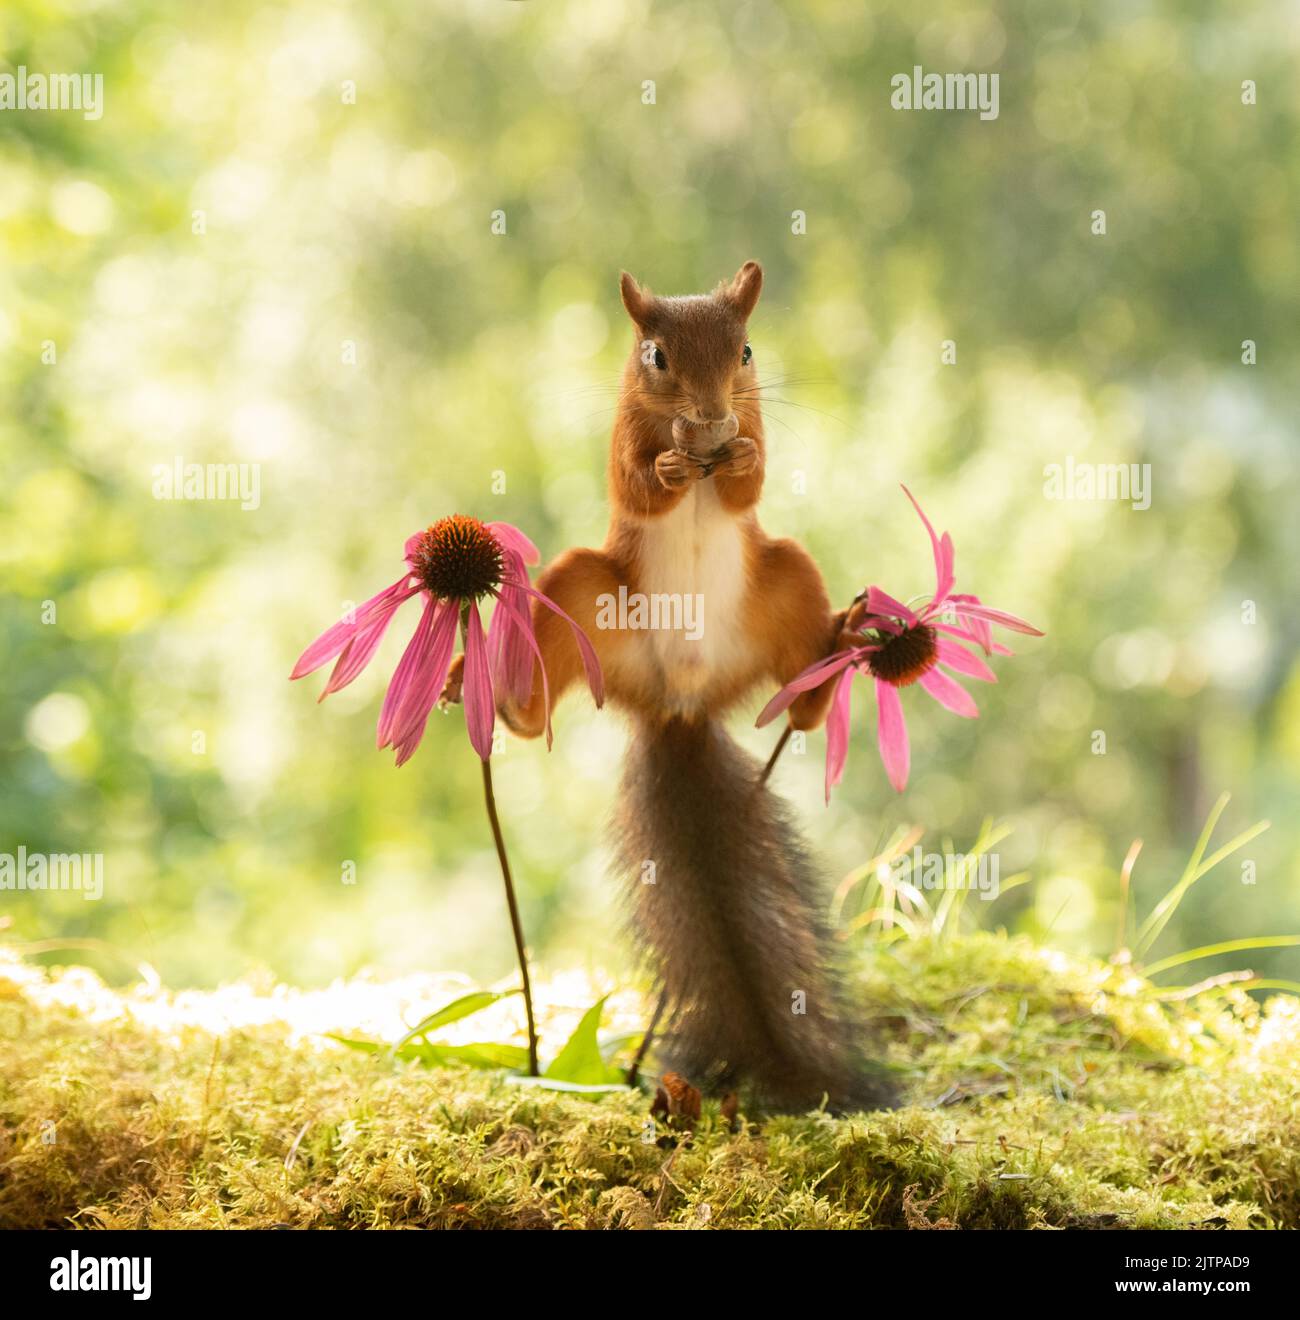 Red Squirrel is in a split between coneflowers Stock Photo